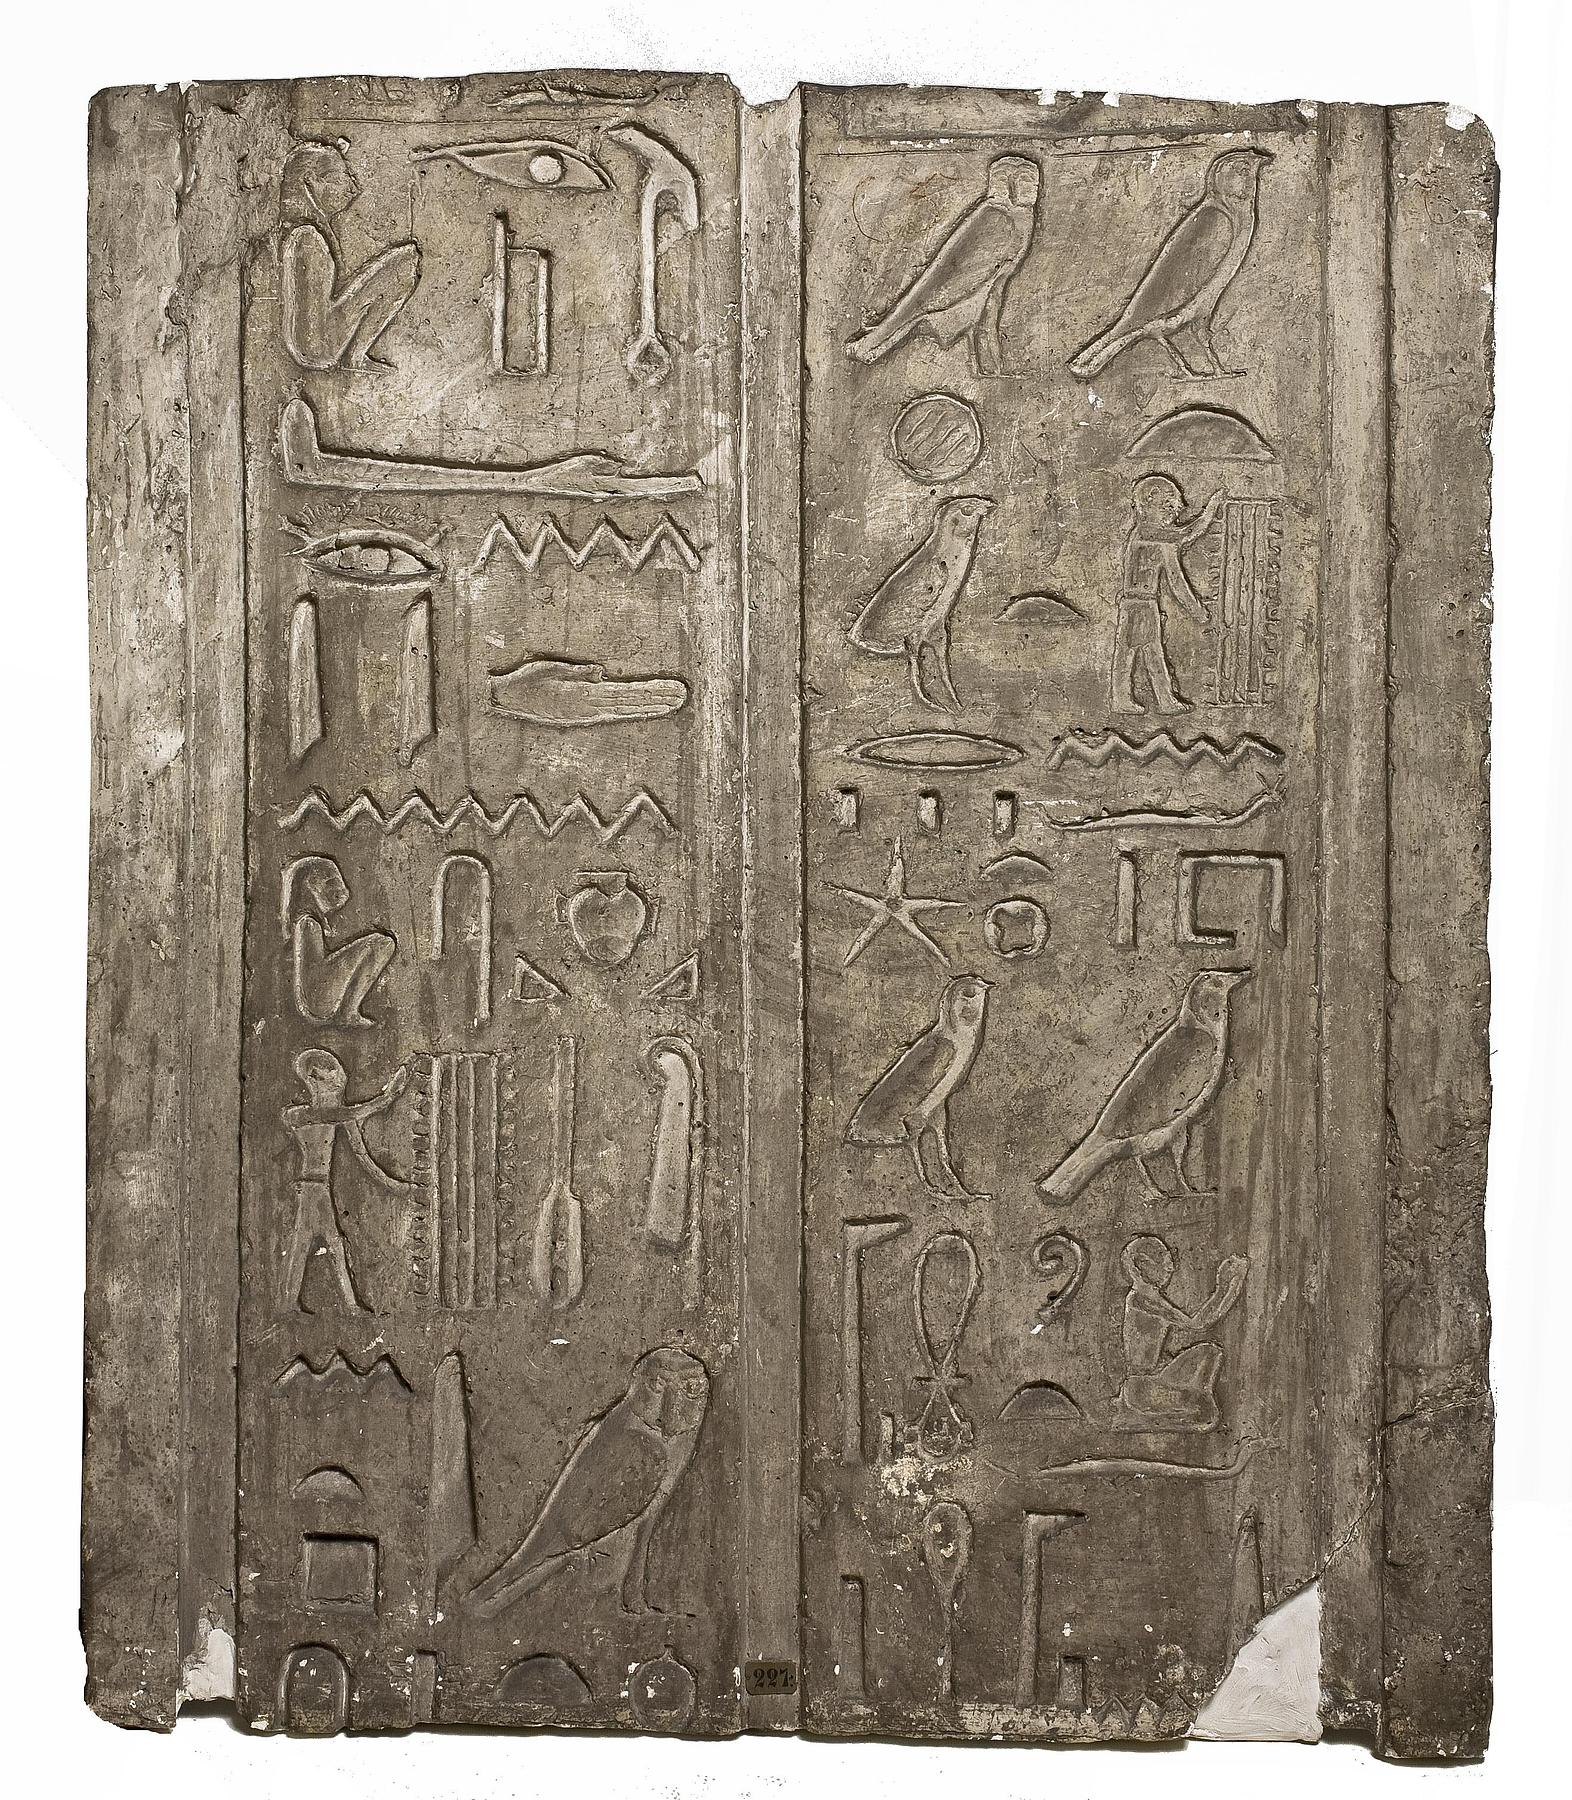 Hieroglyphic inscription, L227